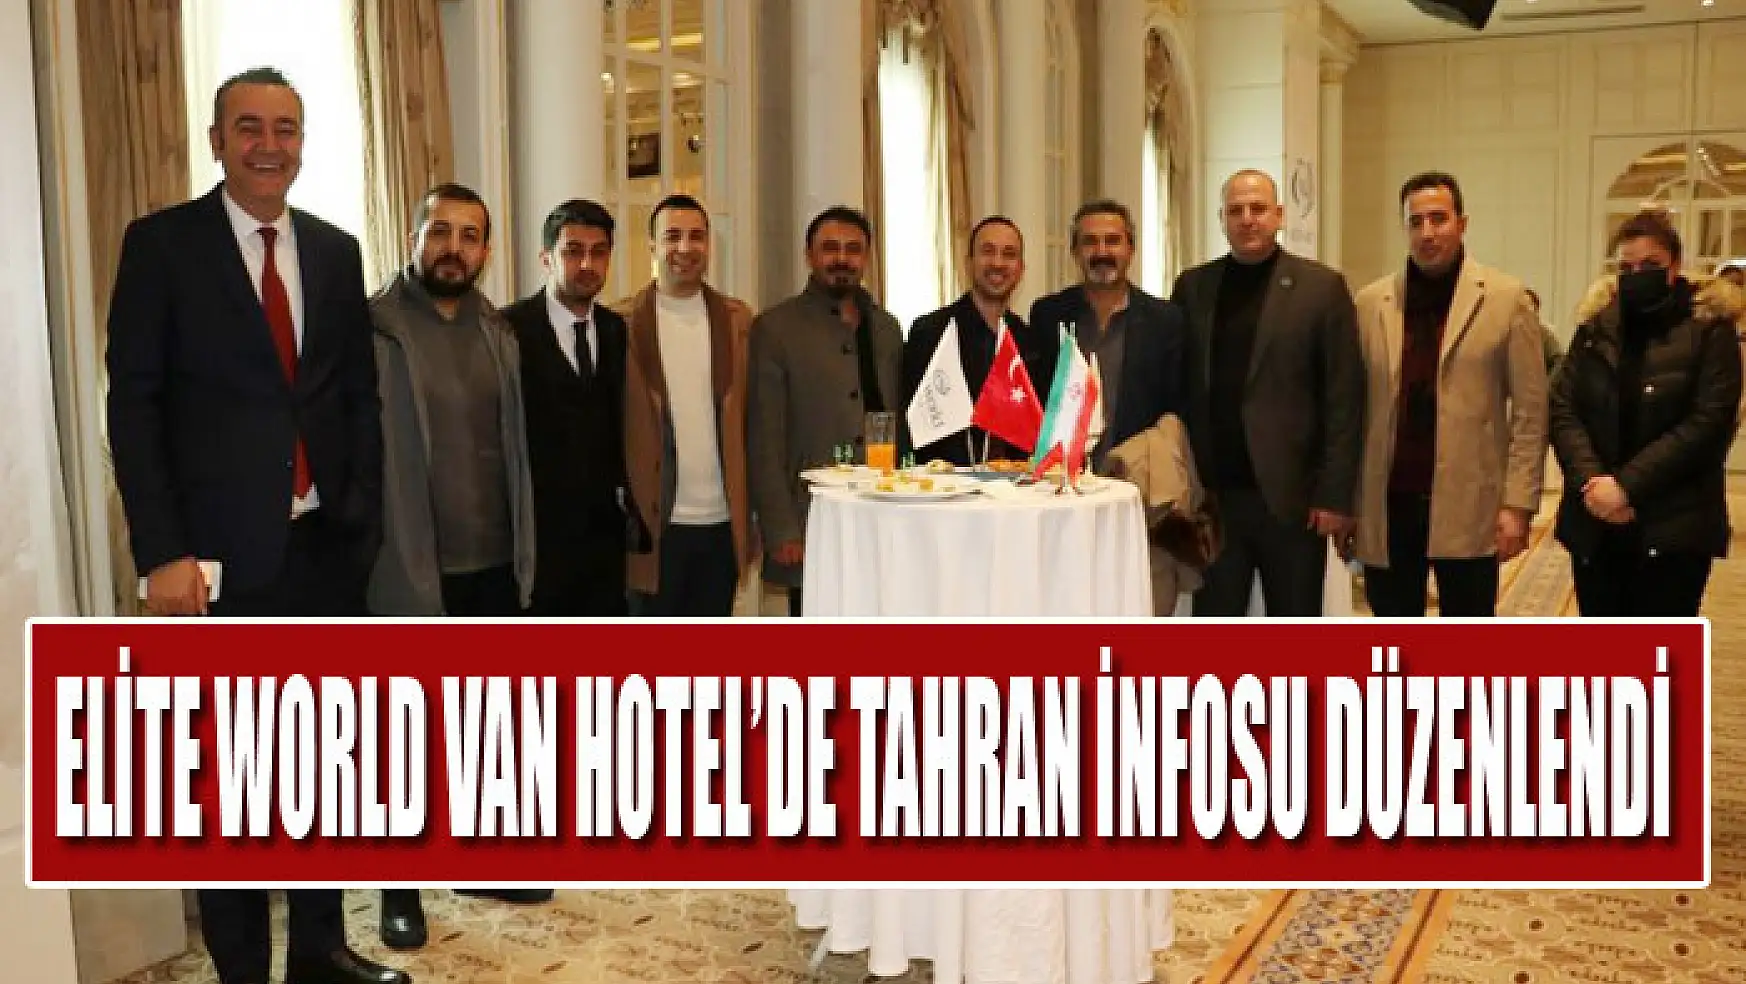 Elite World Van Hotel'de Tahran infosu düzenlendi